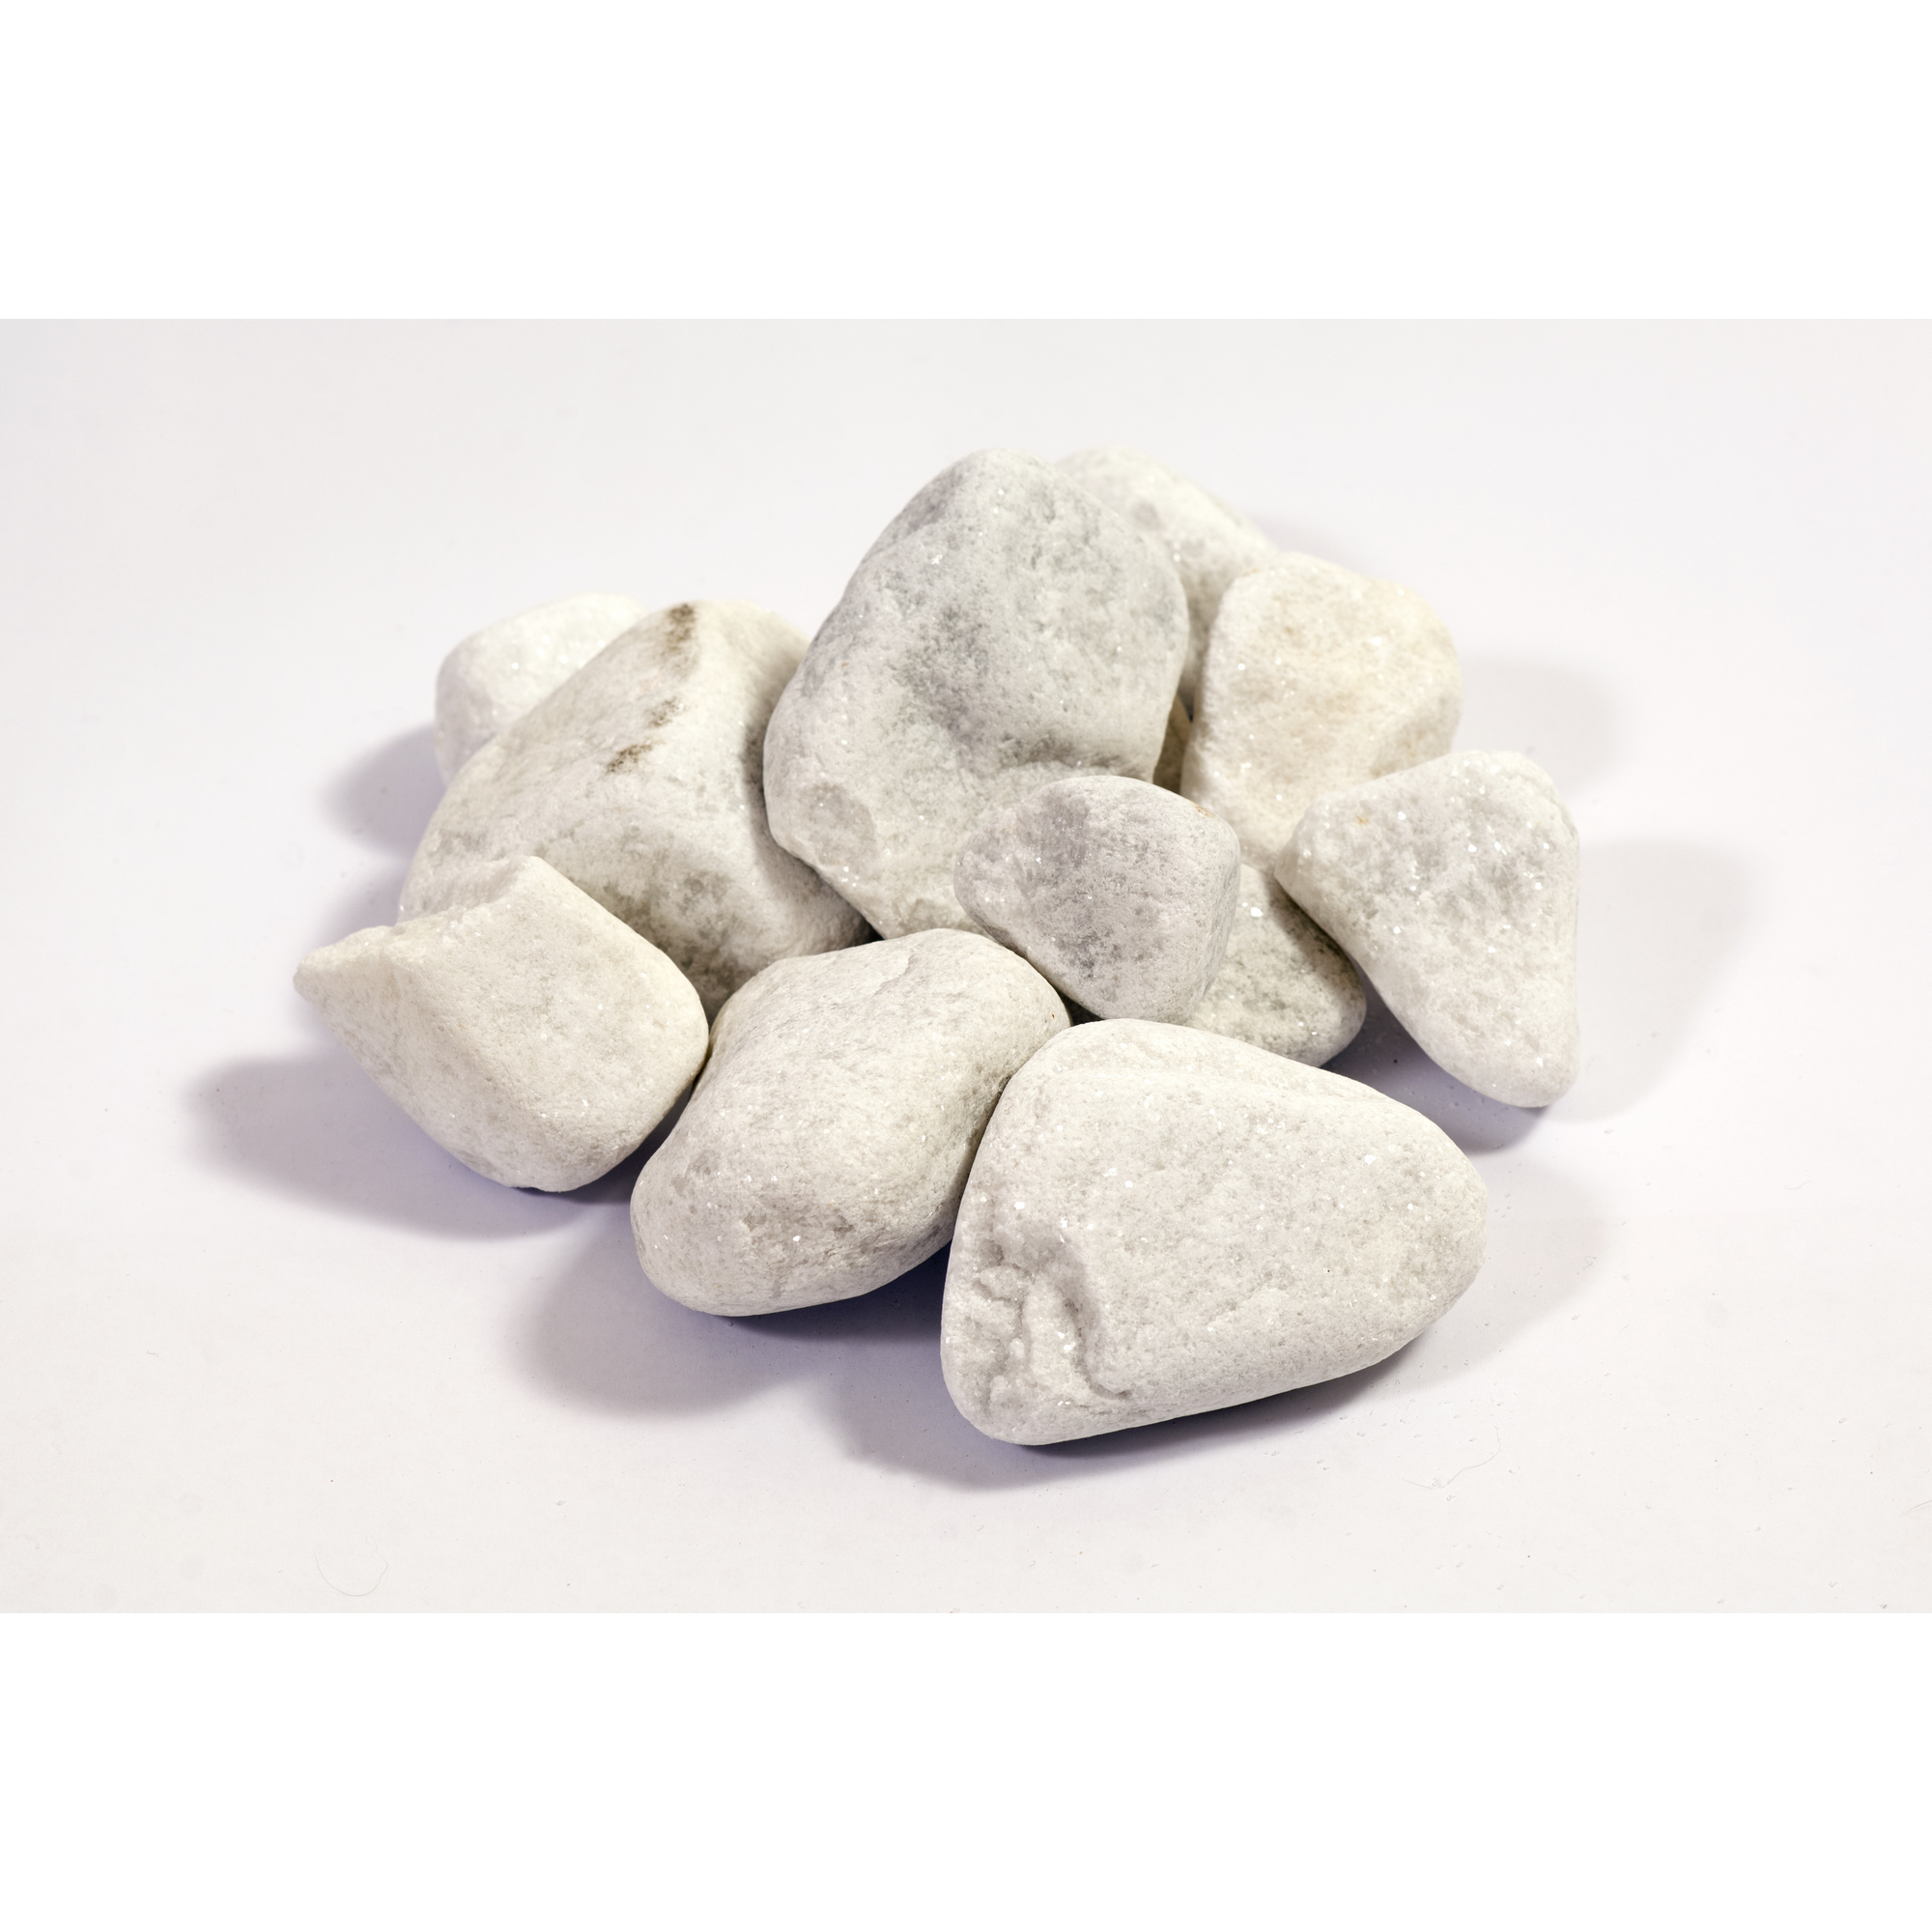 Carrara-Marmorkies weiß 40/60 mm 500 kg + product picture